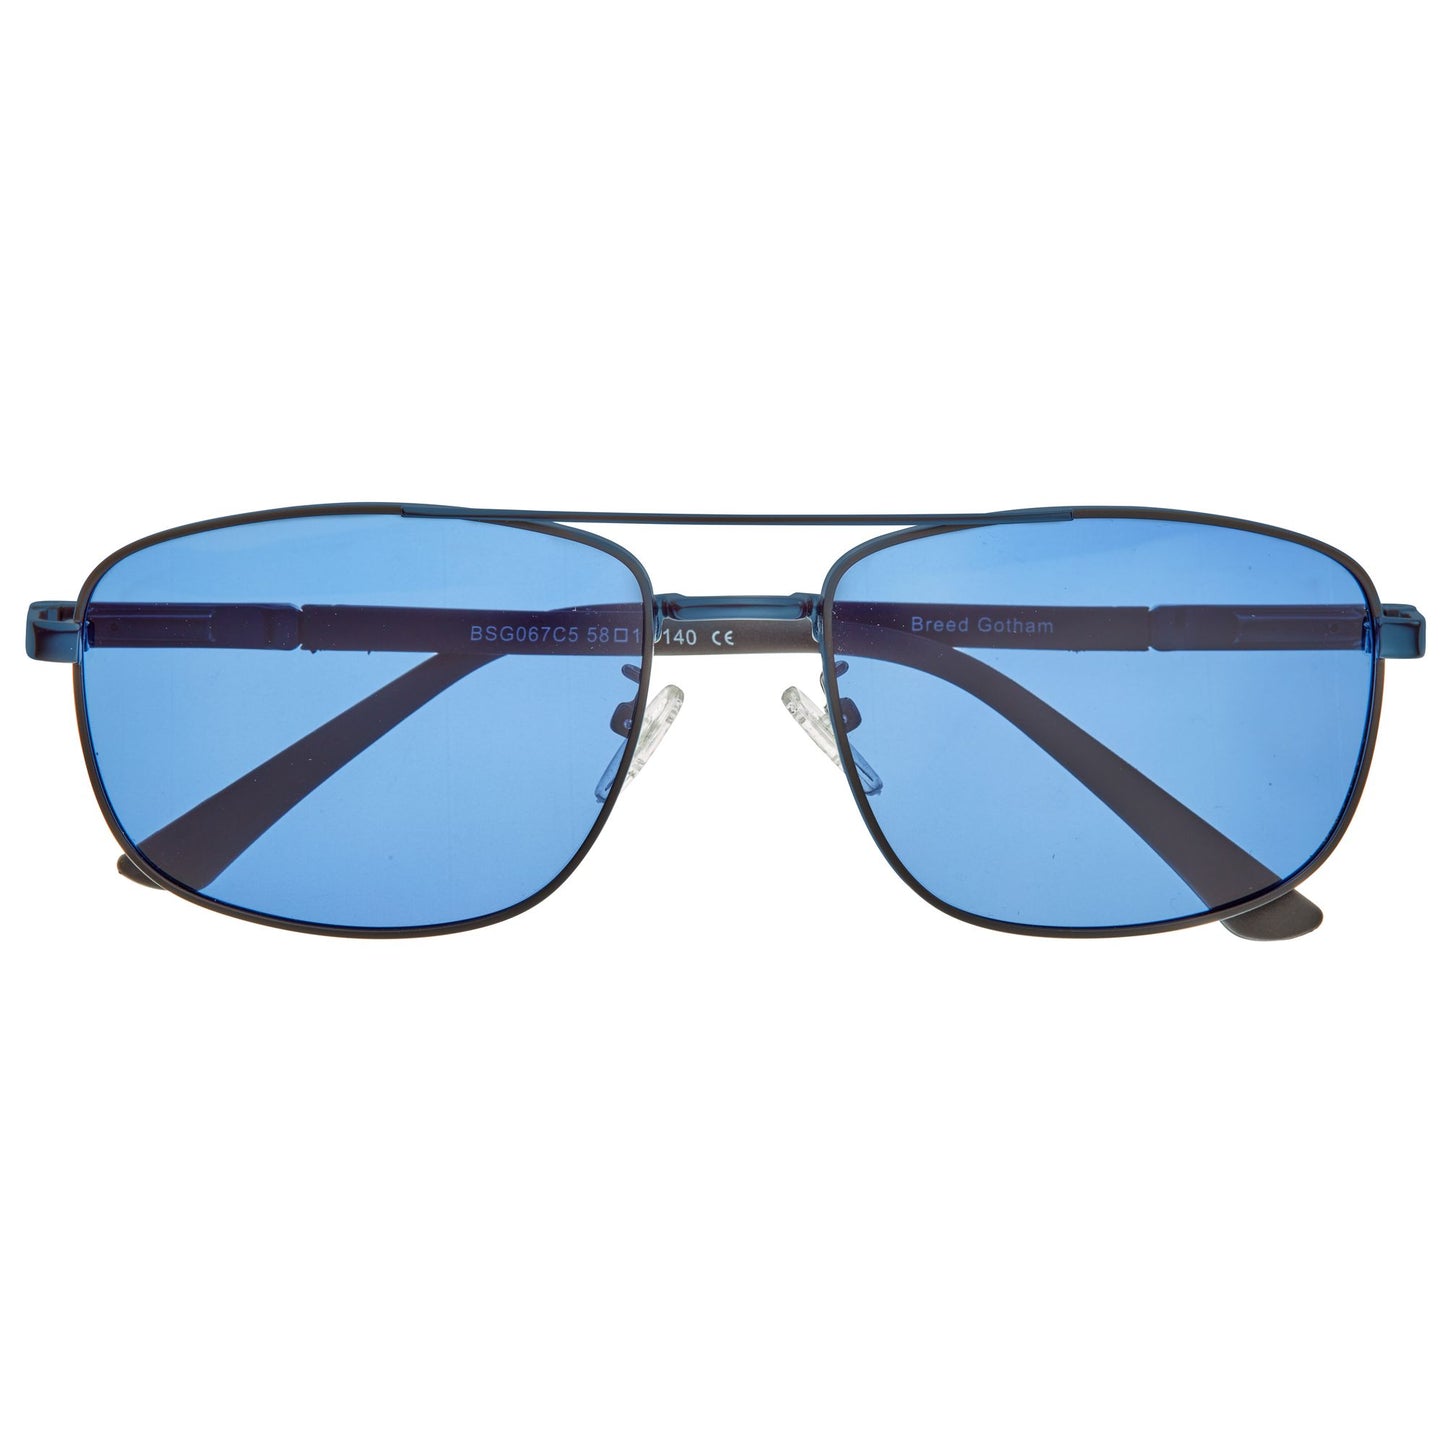 Breed Gotham Polarized Sunglasses - Navy/Blue - BSG067C5